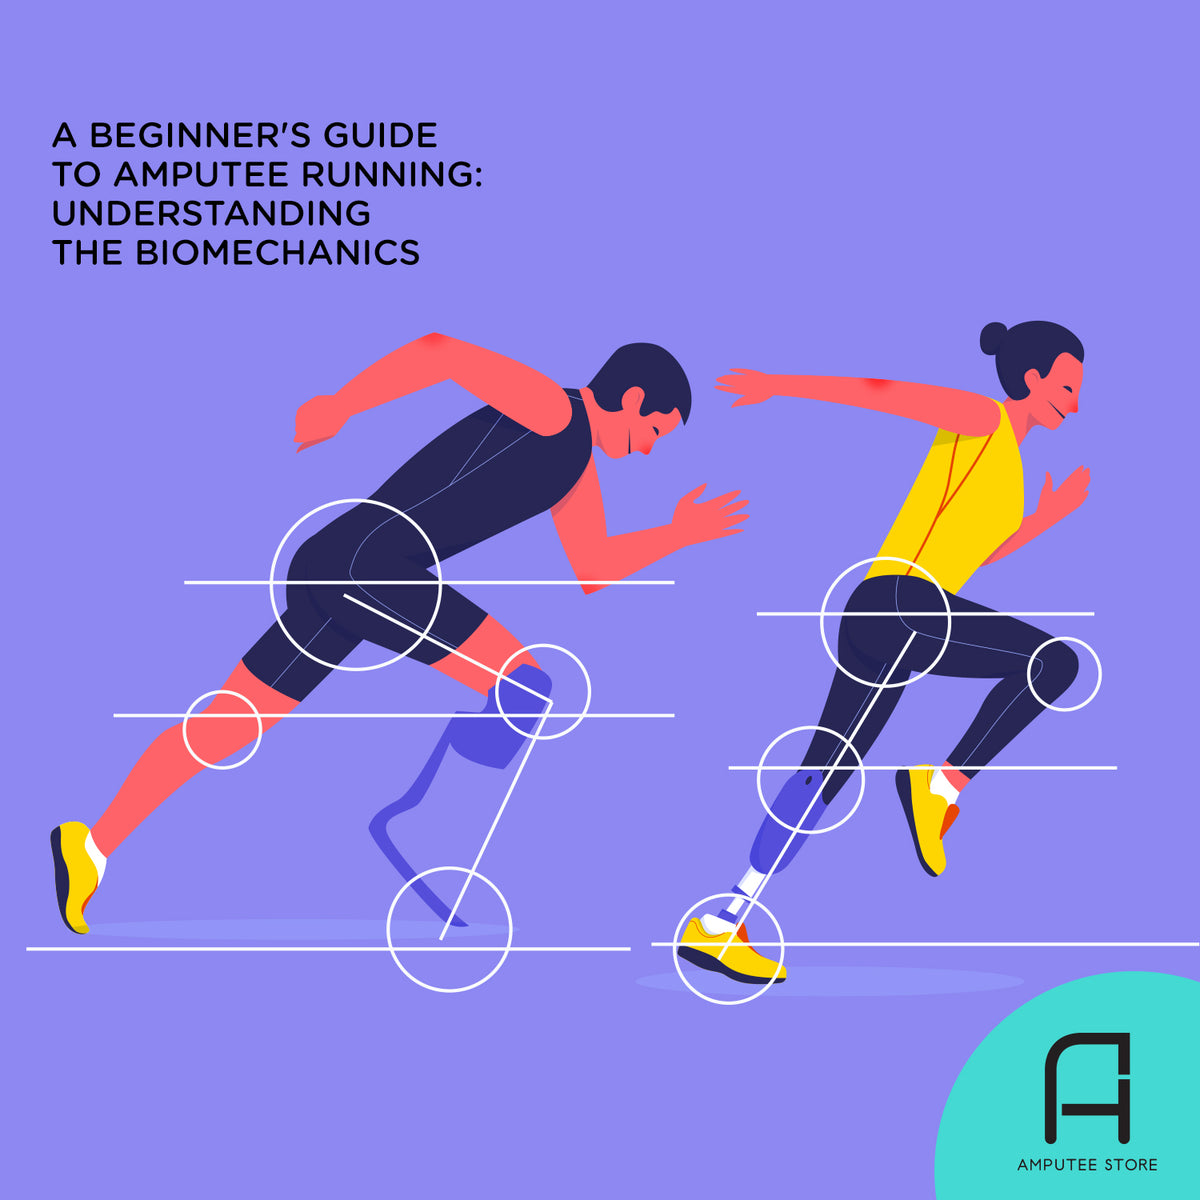 Beginners Guide To Running